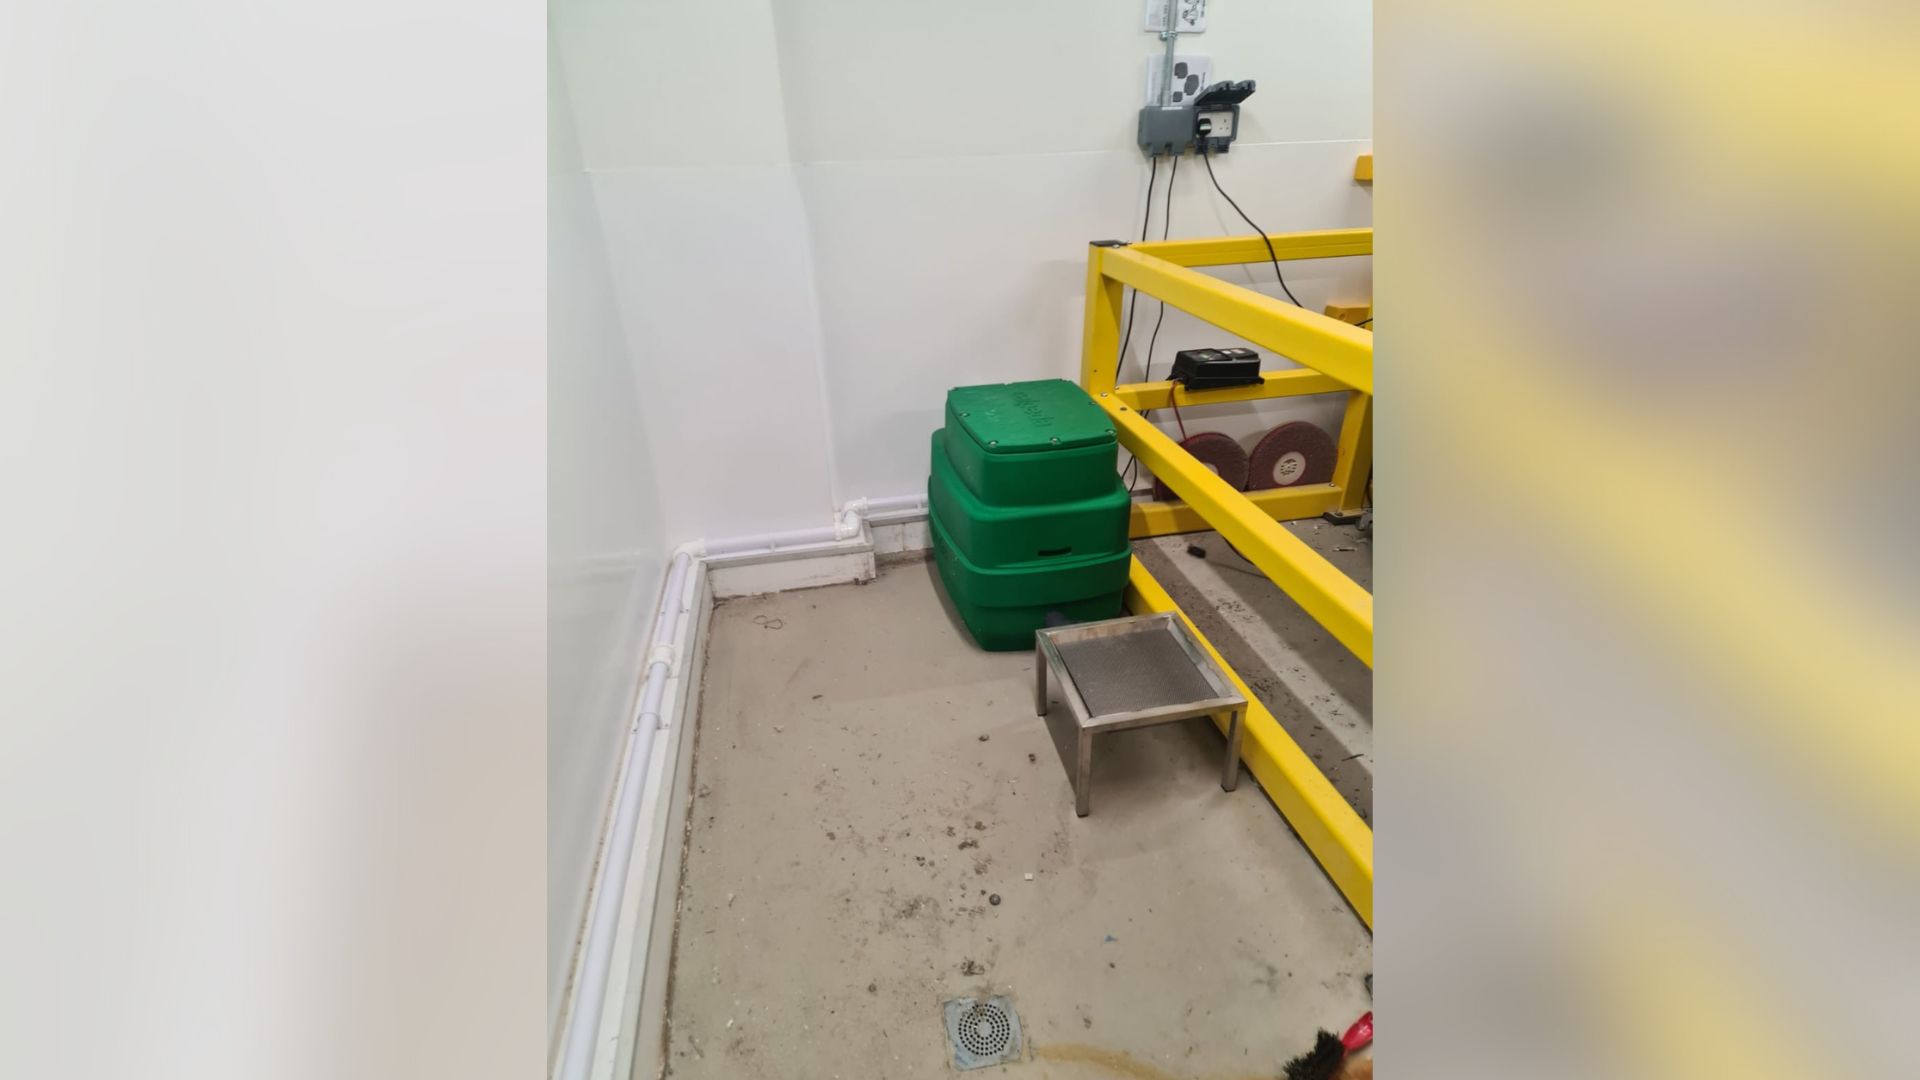 Wet Floor Scrubber Pump System for a Large Online Retailer